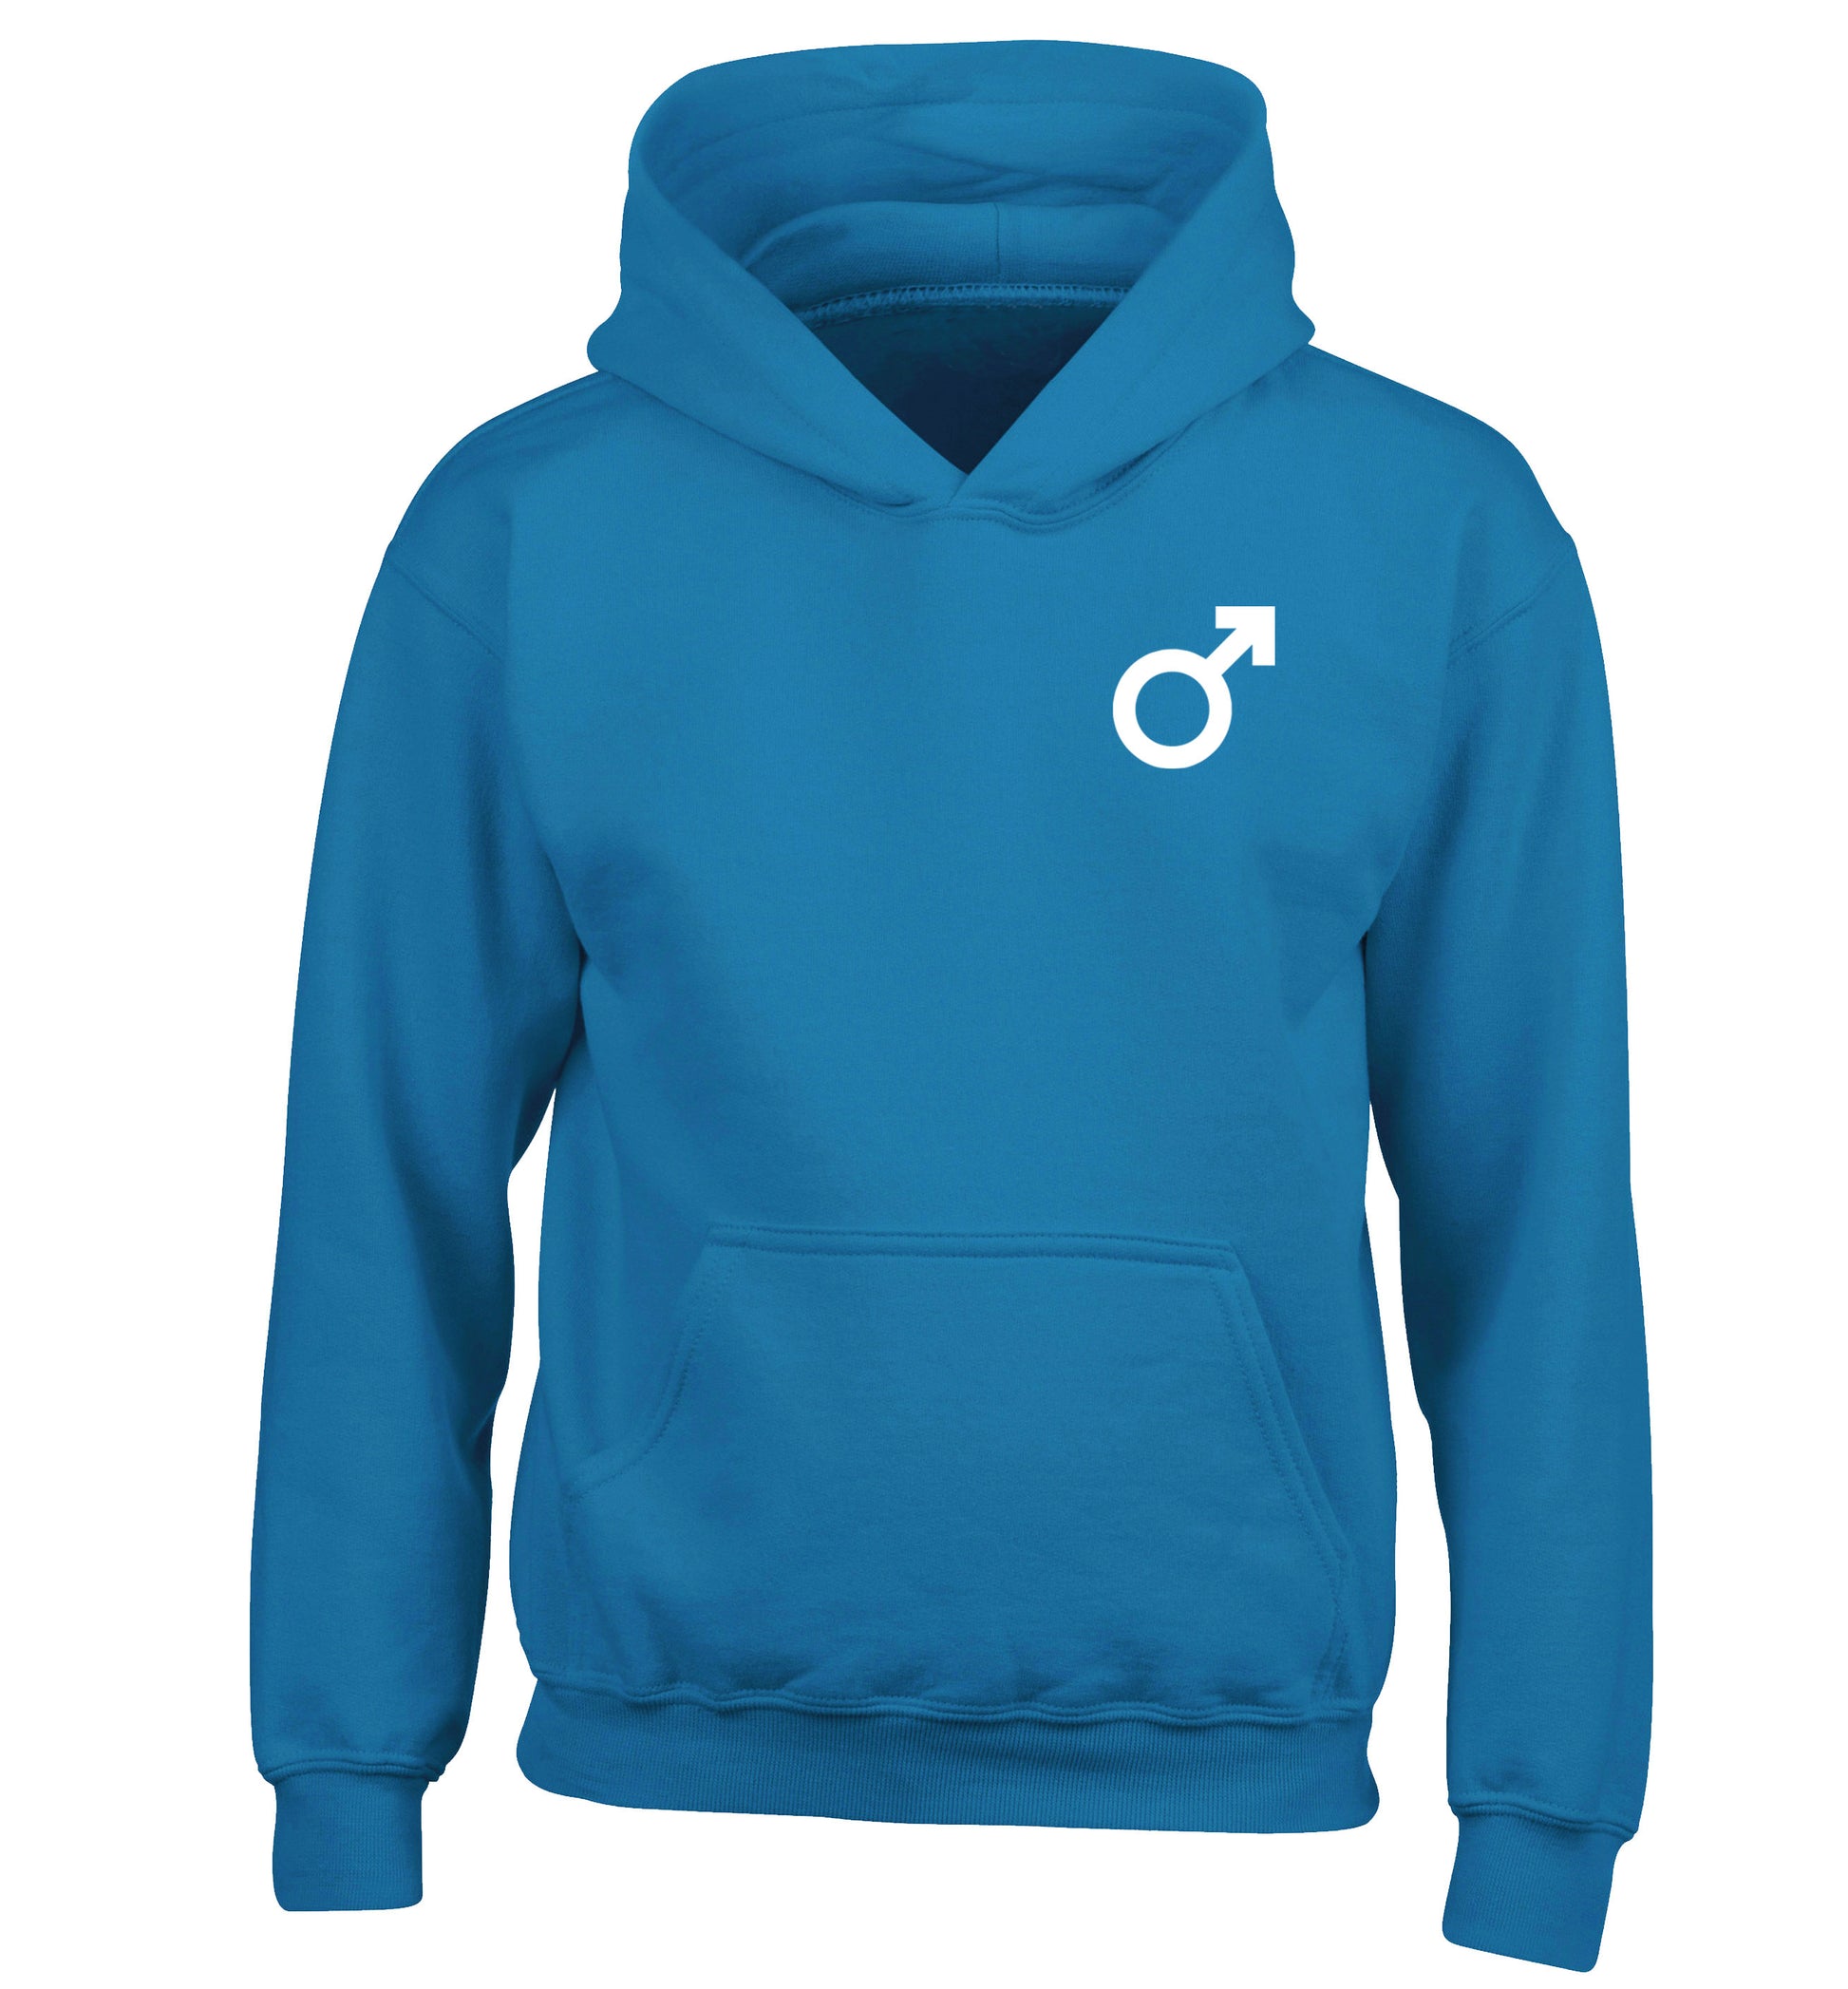 Male symbol pocket children's blue hoodie 12-14 Years